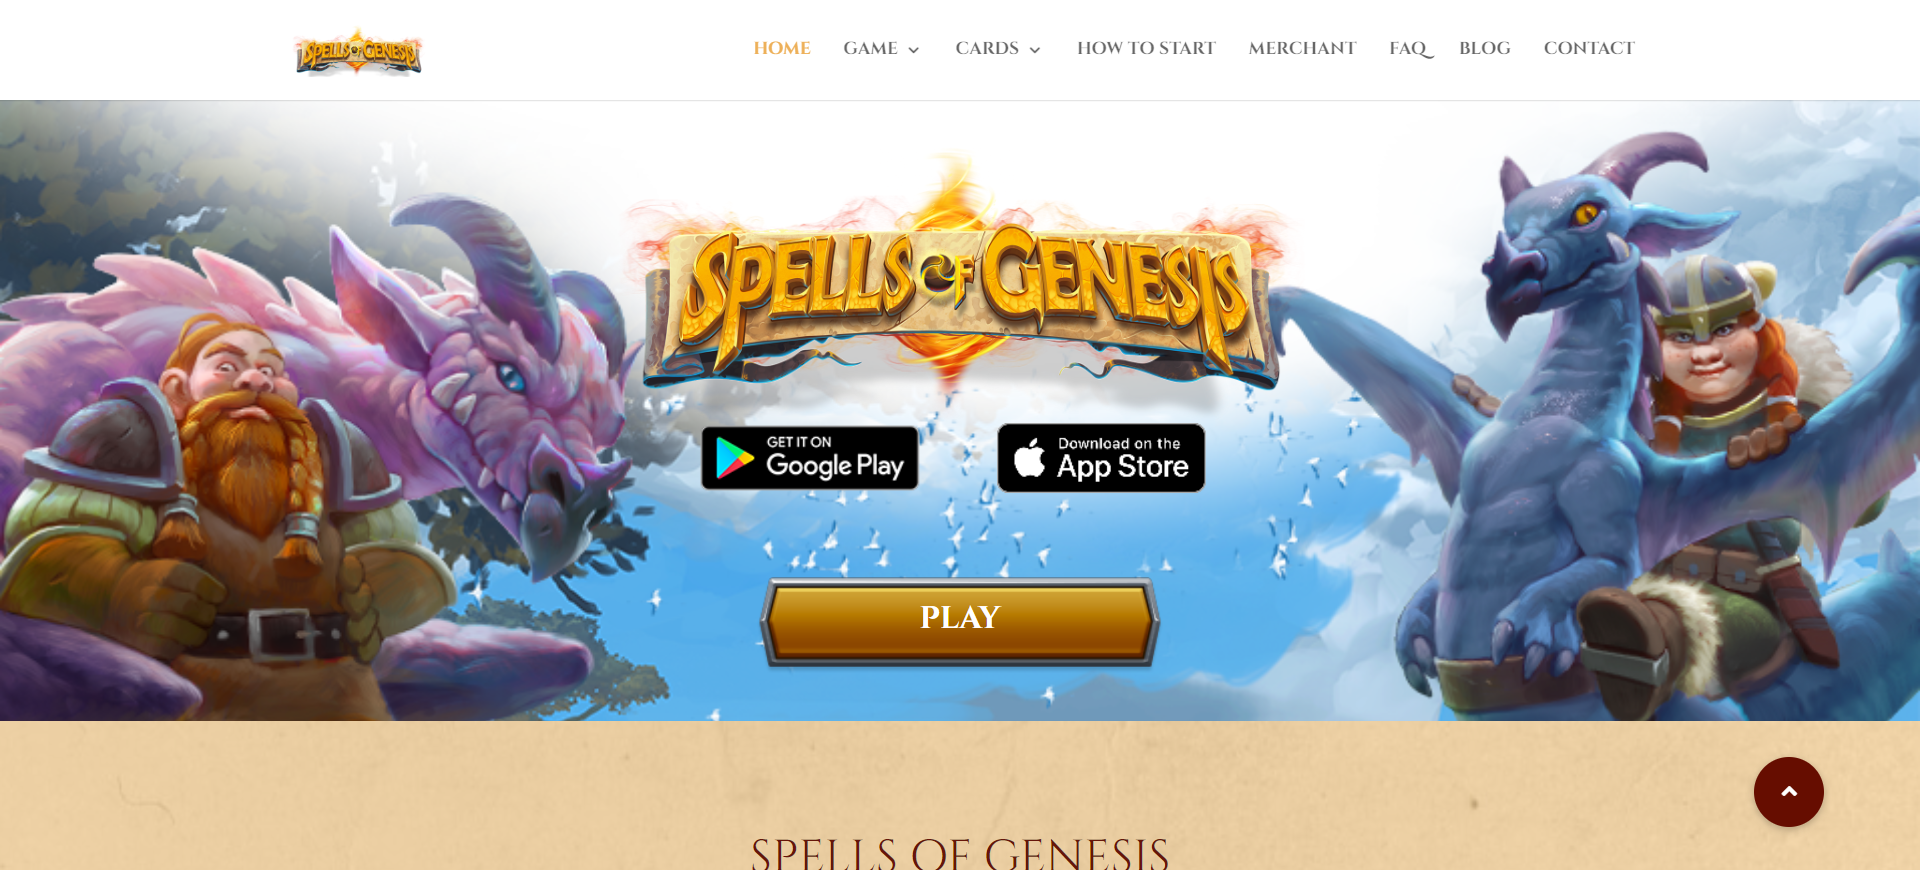 Spells of Genesis launches Social Club